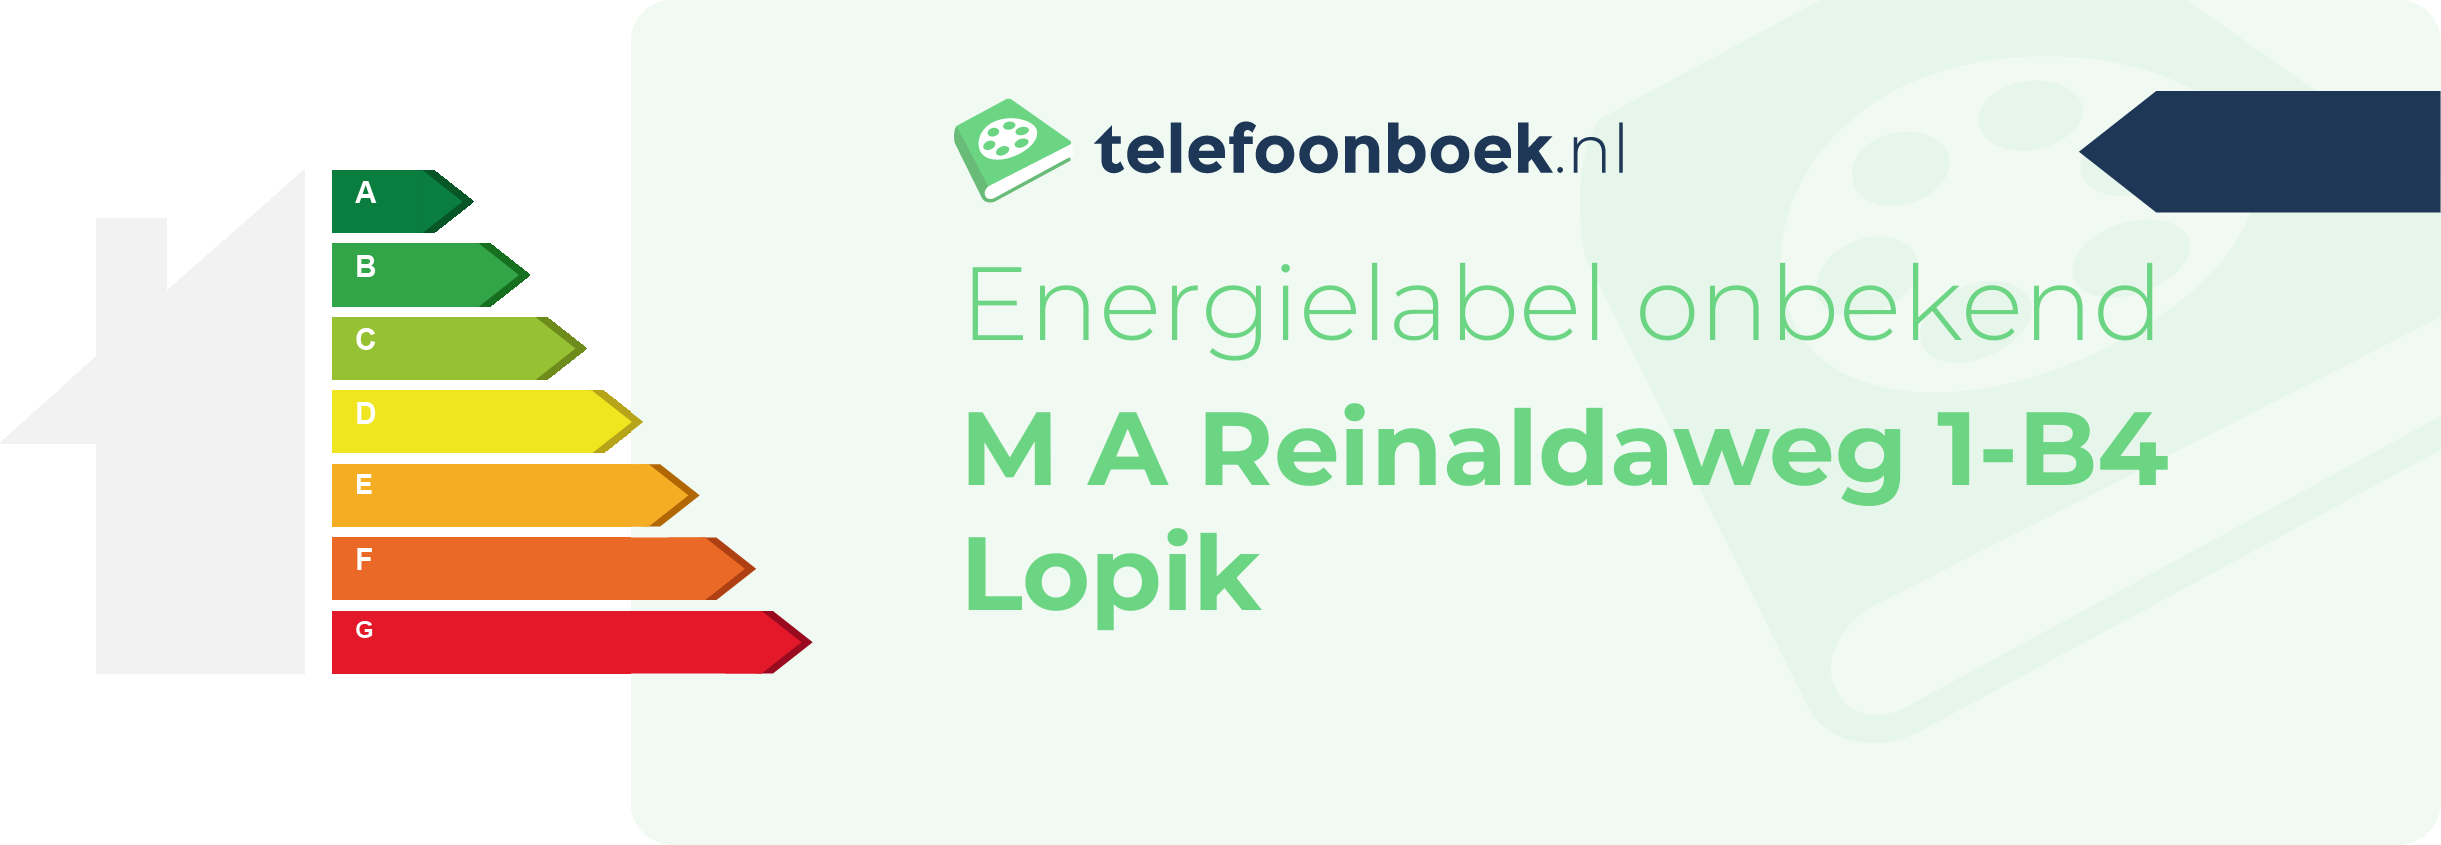 Energielabel M A Reinaldaweg 1-B4 Lopik